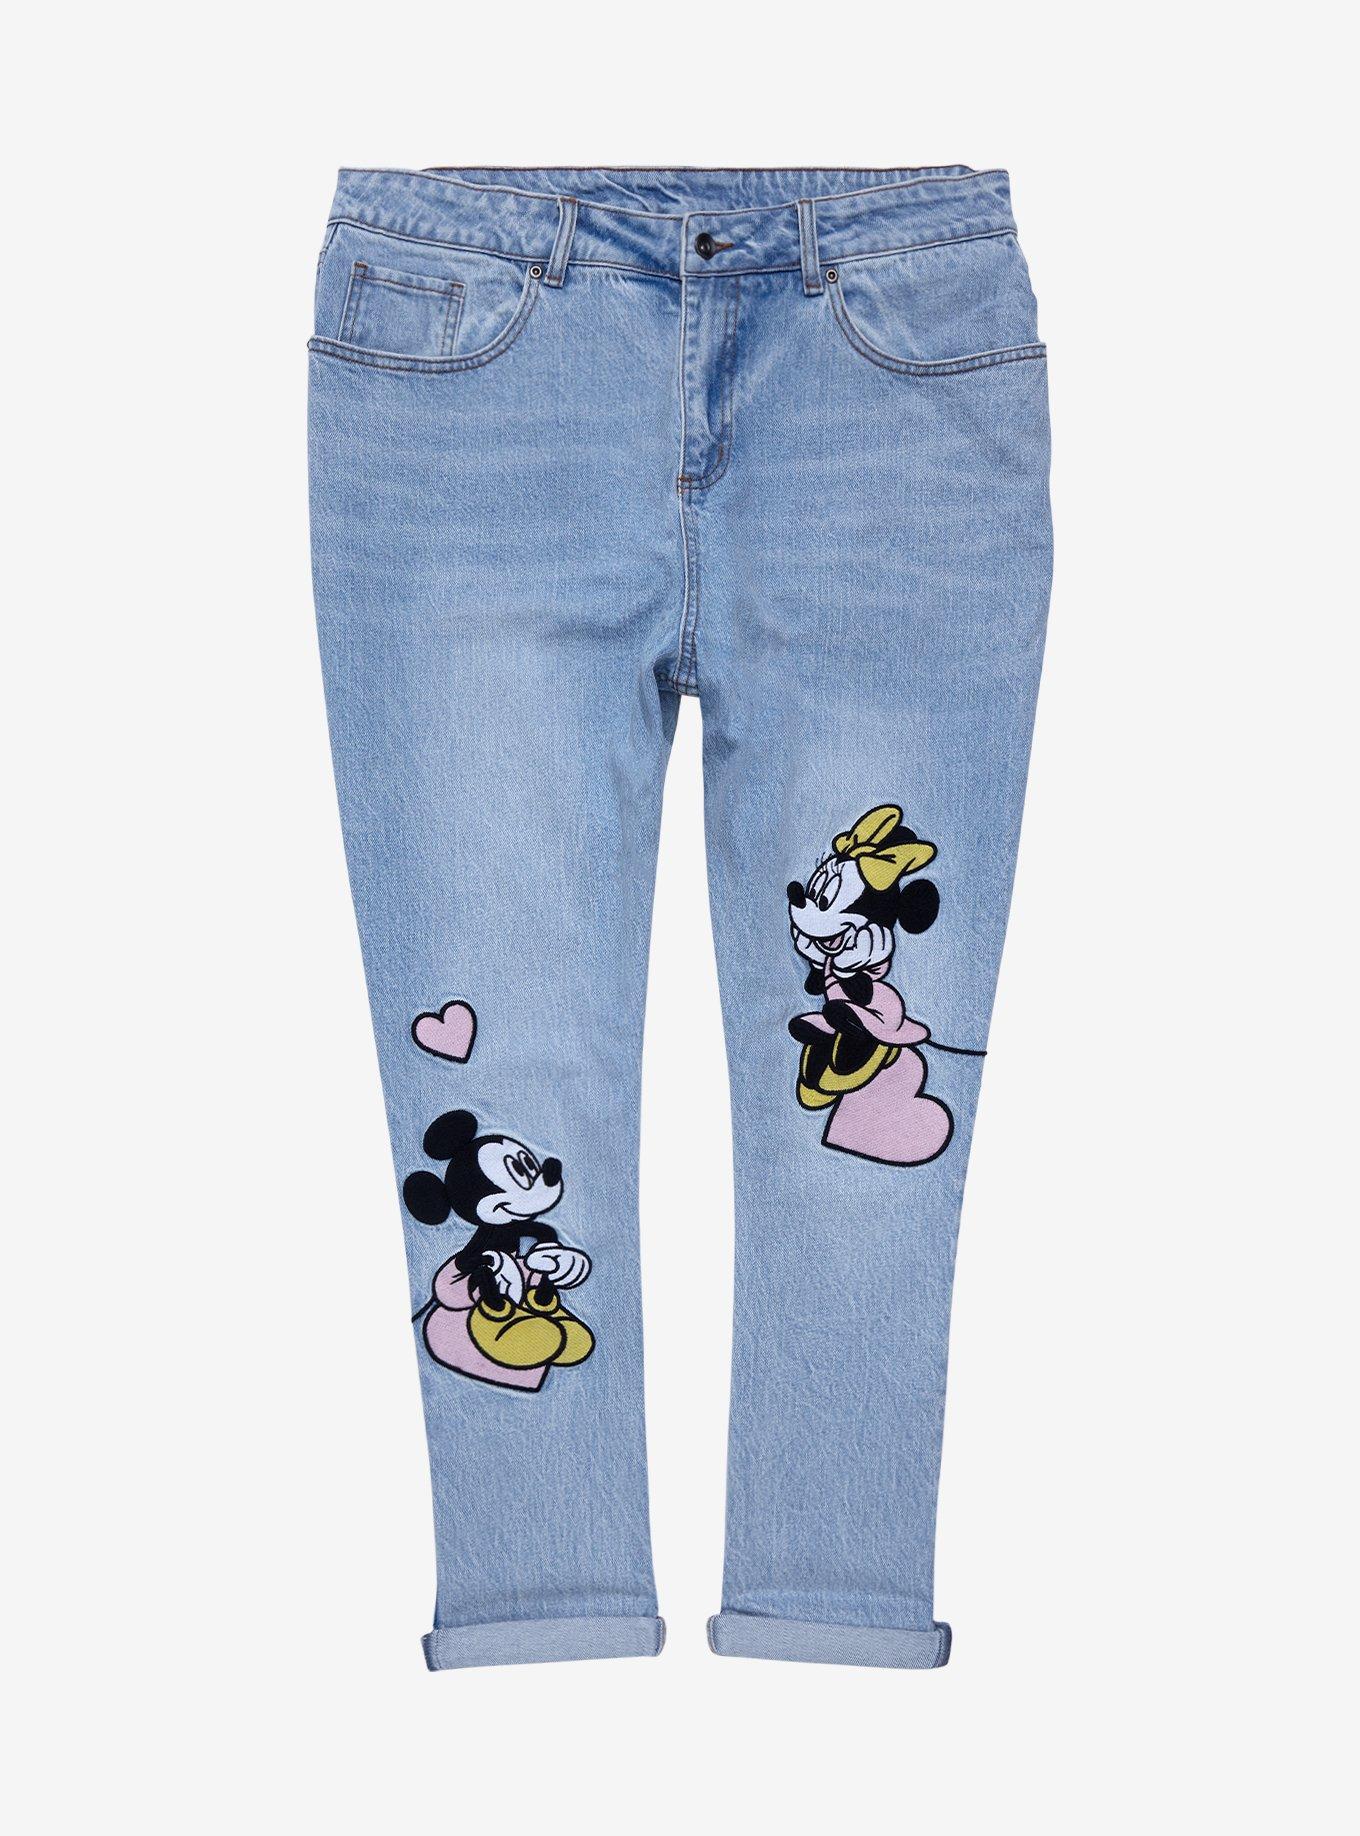 Slim Mom Jeans - Denim blue/Mickey Mouse - Ladies